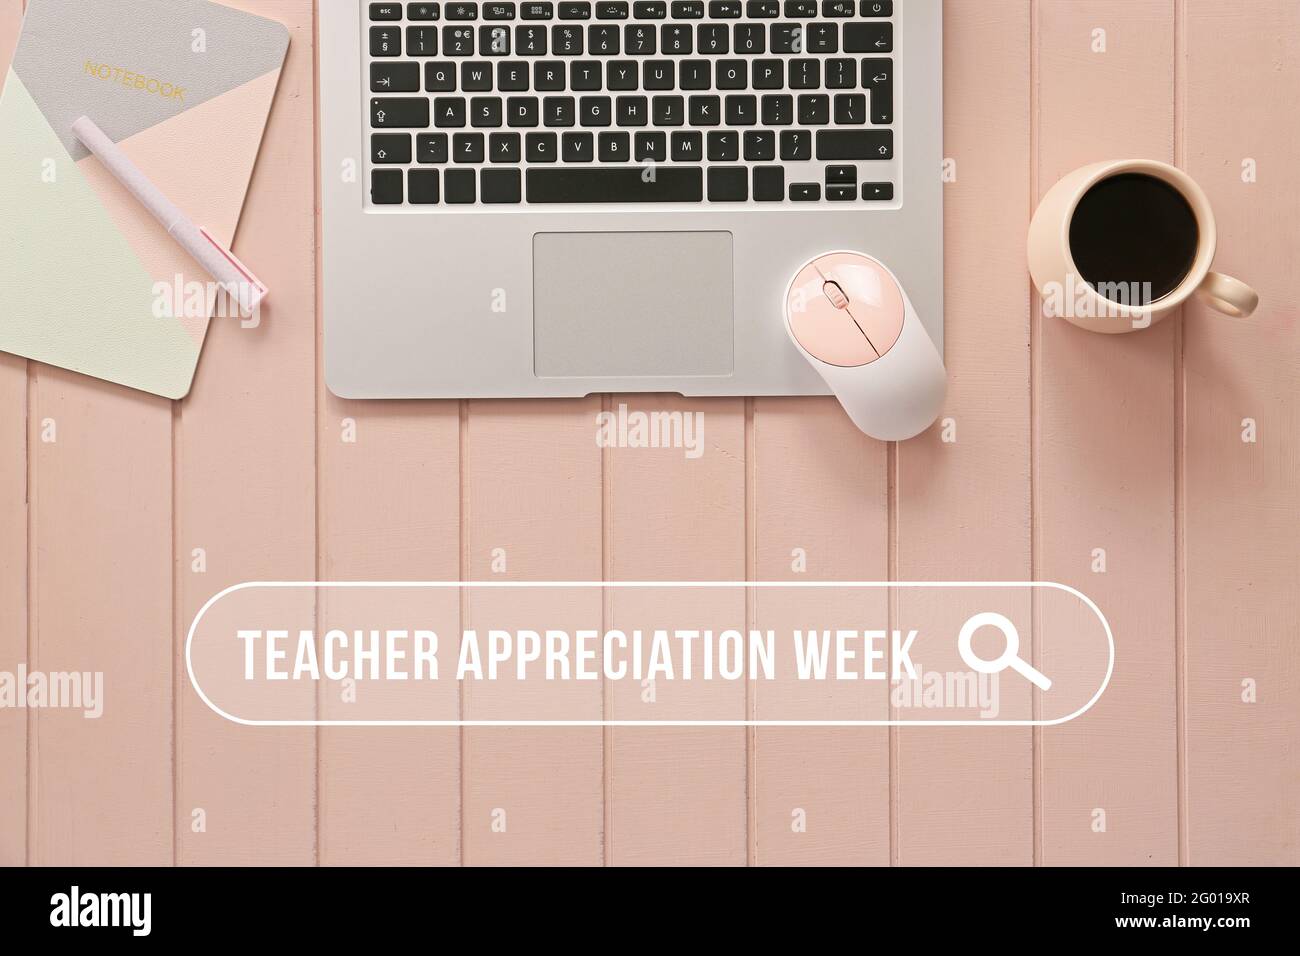 Greeting card for Teacher Appreciation Week Stock Photo